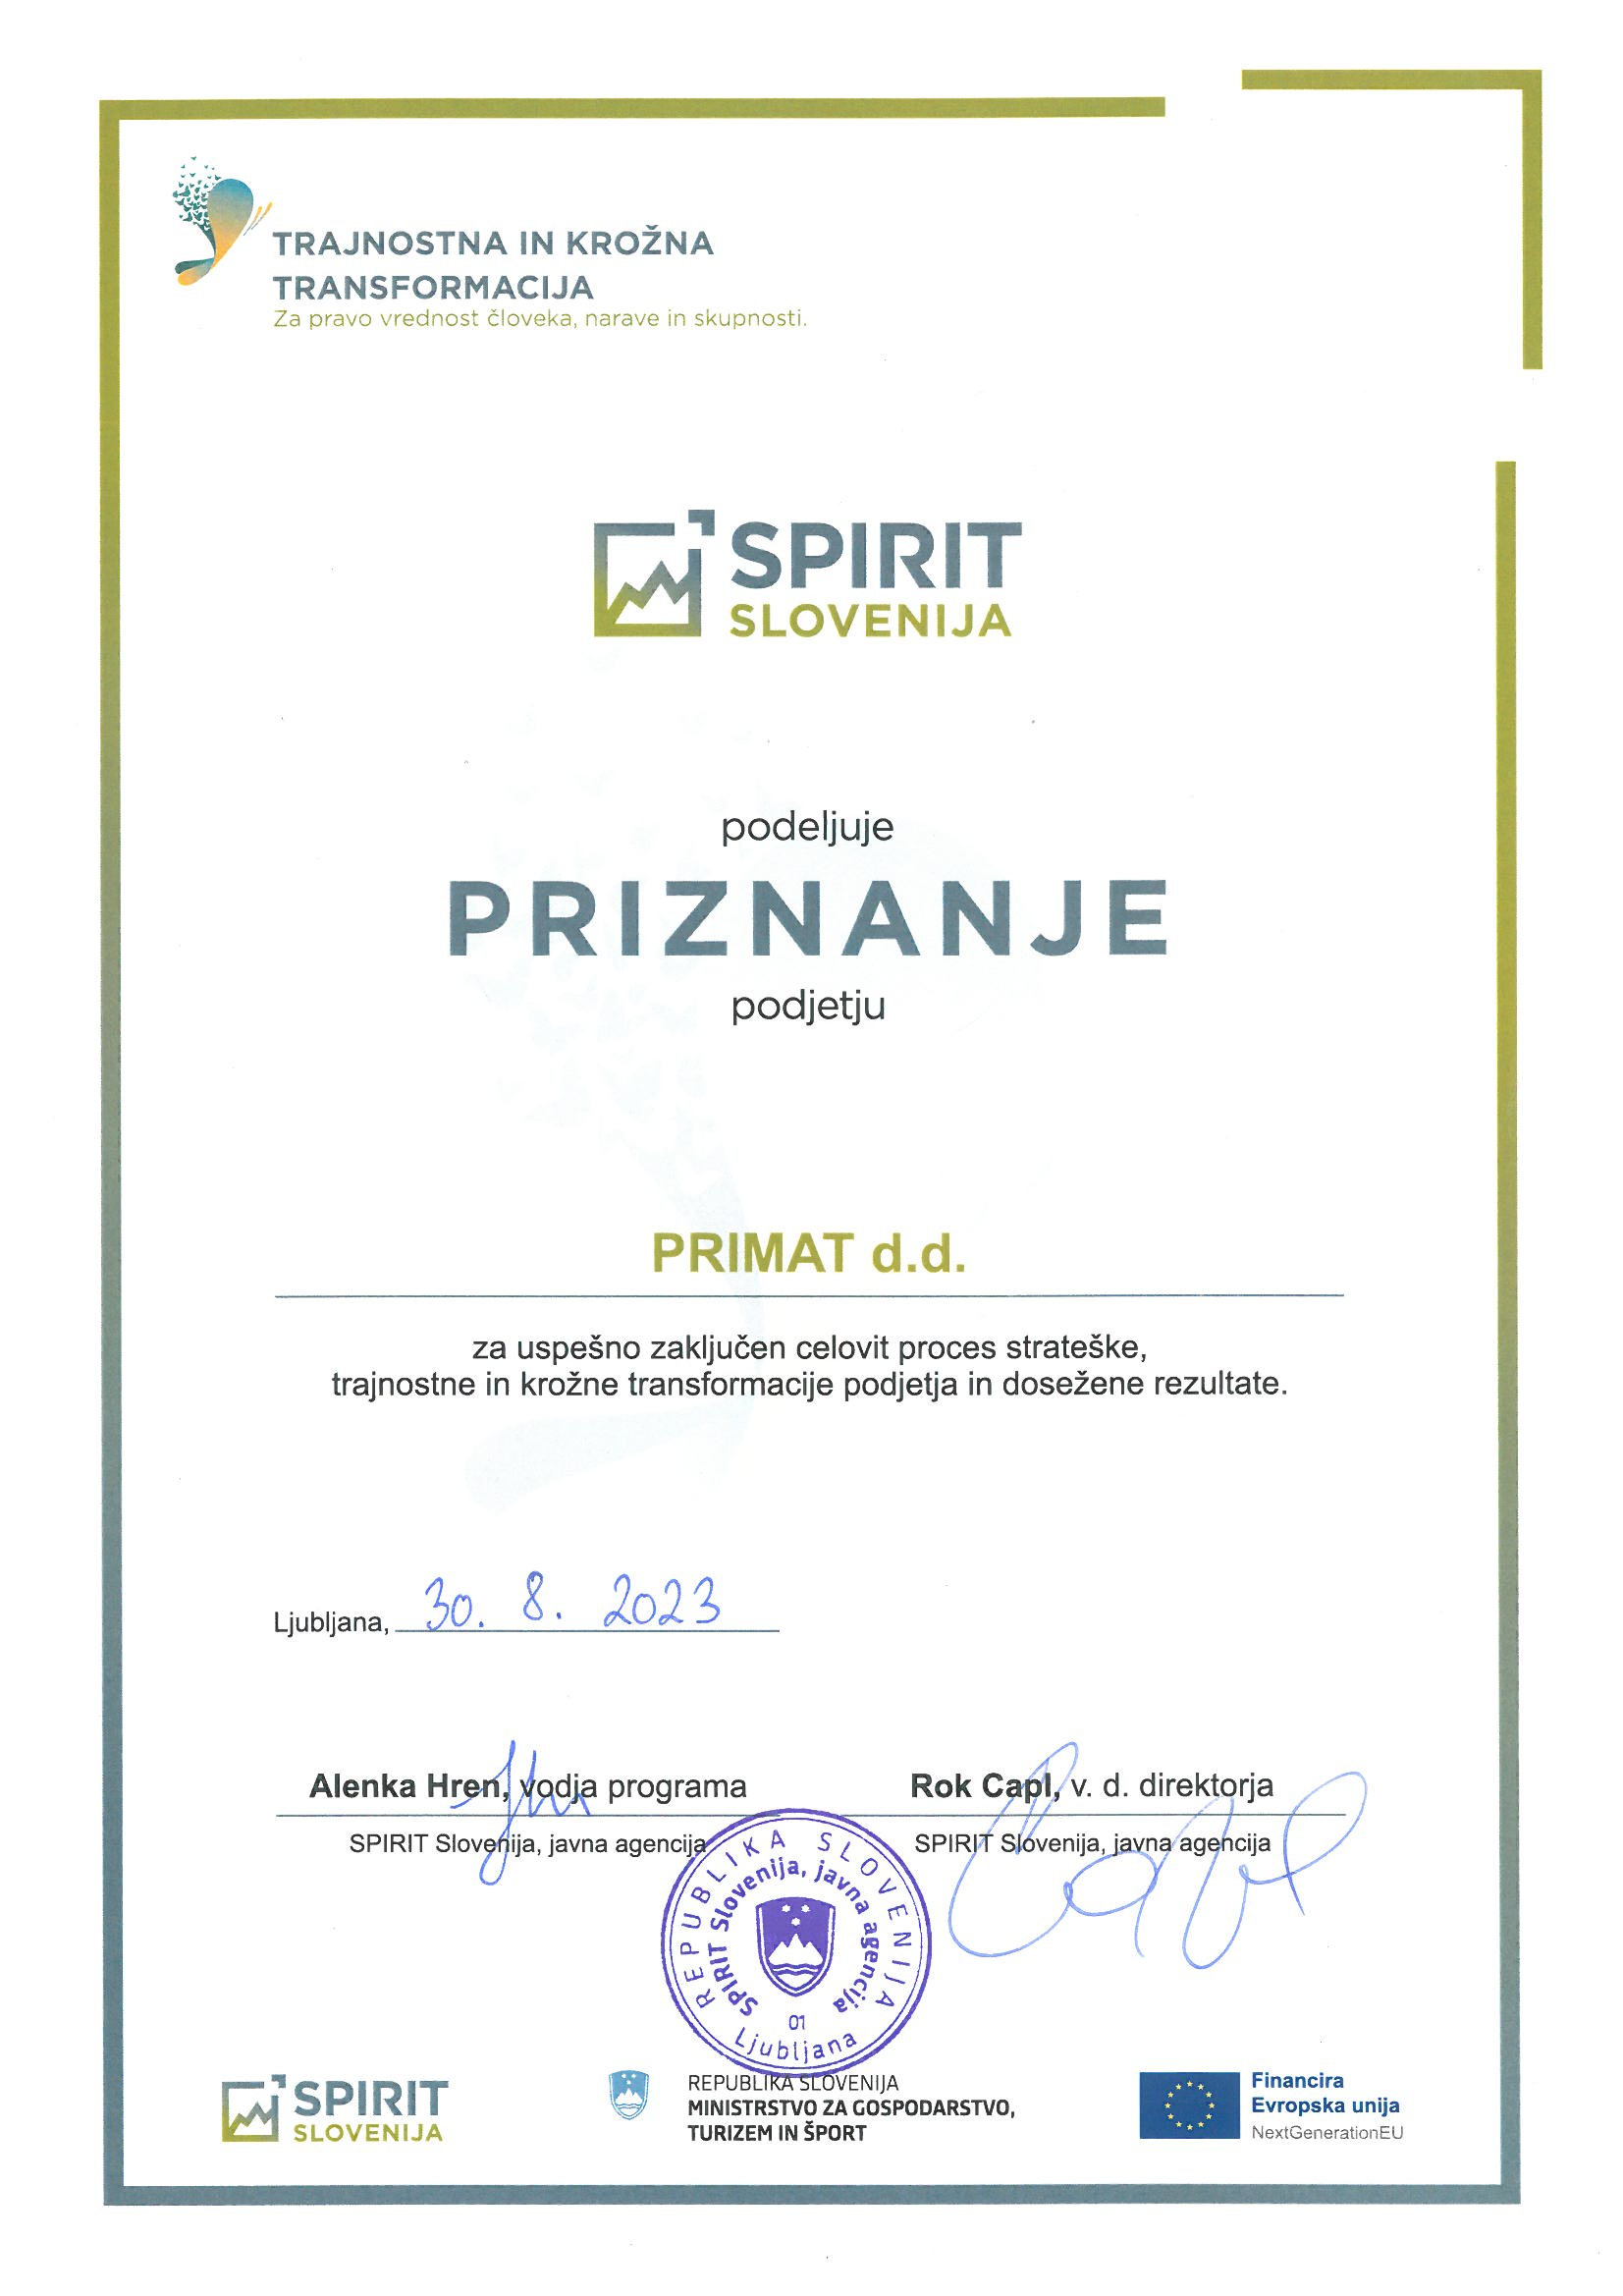 SPIRIT Slovenia award